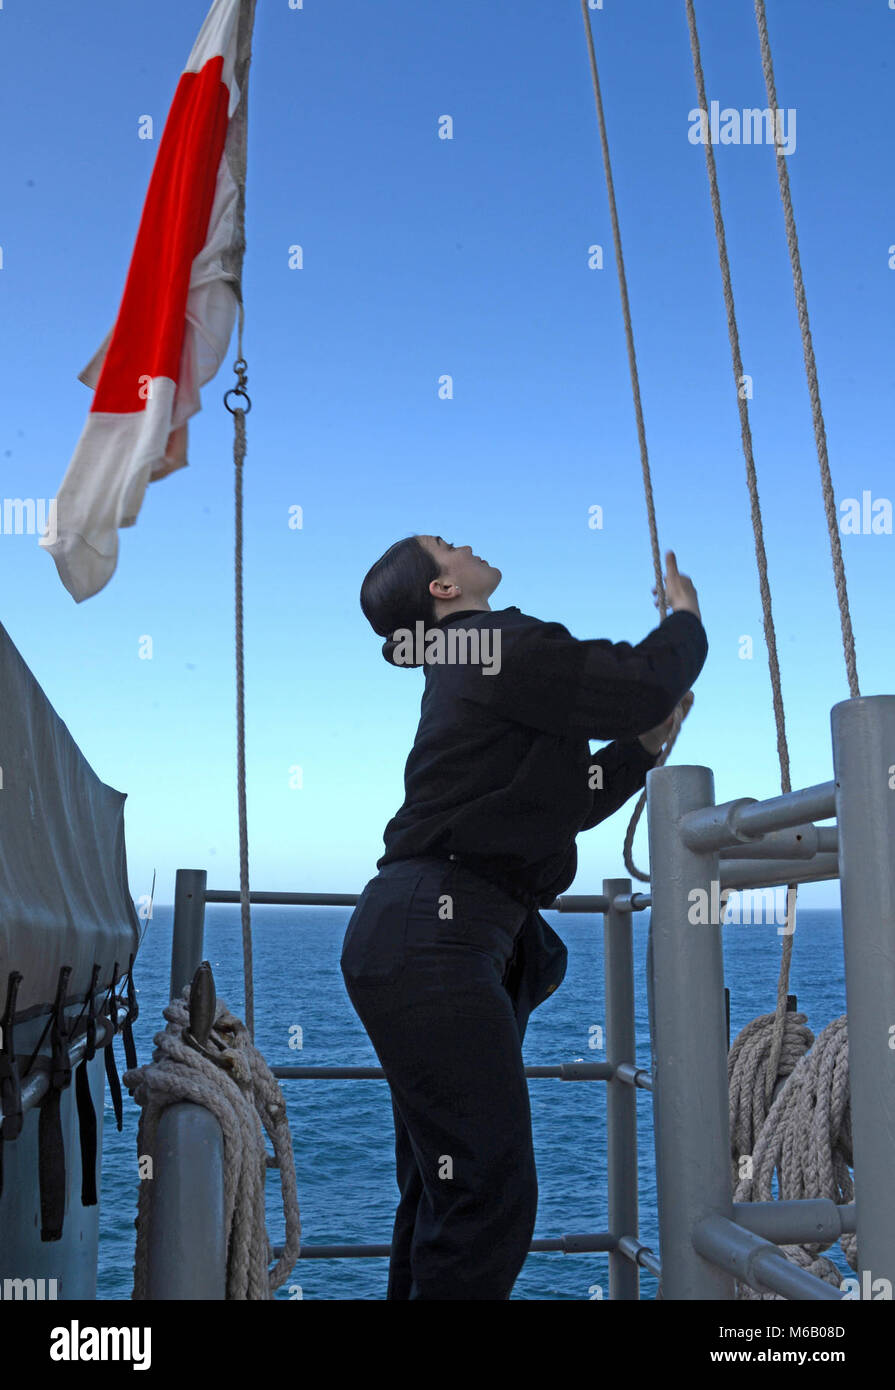 ATLANTIC OCEAN (Feb. 24, 2018) Quartermaster Seaman Vannessa Baltodano raises the foxtrot flag for flight quarters aboard the Wasp-class amphibious assault ship USS Iwo Jima (LHD 7) Feb. 24, 2018. Iwo Jima, homeported in Mayport, Florida, is conducting naval operations in the U.S. 6th Fleet area of operations.  (U.S. Navy Stock Photo